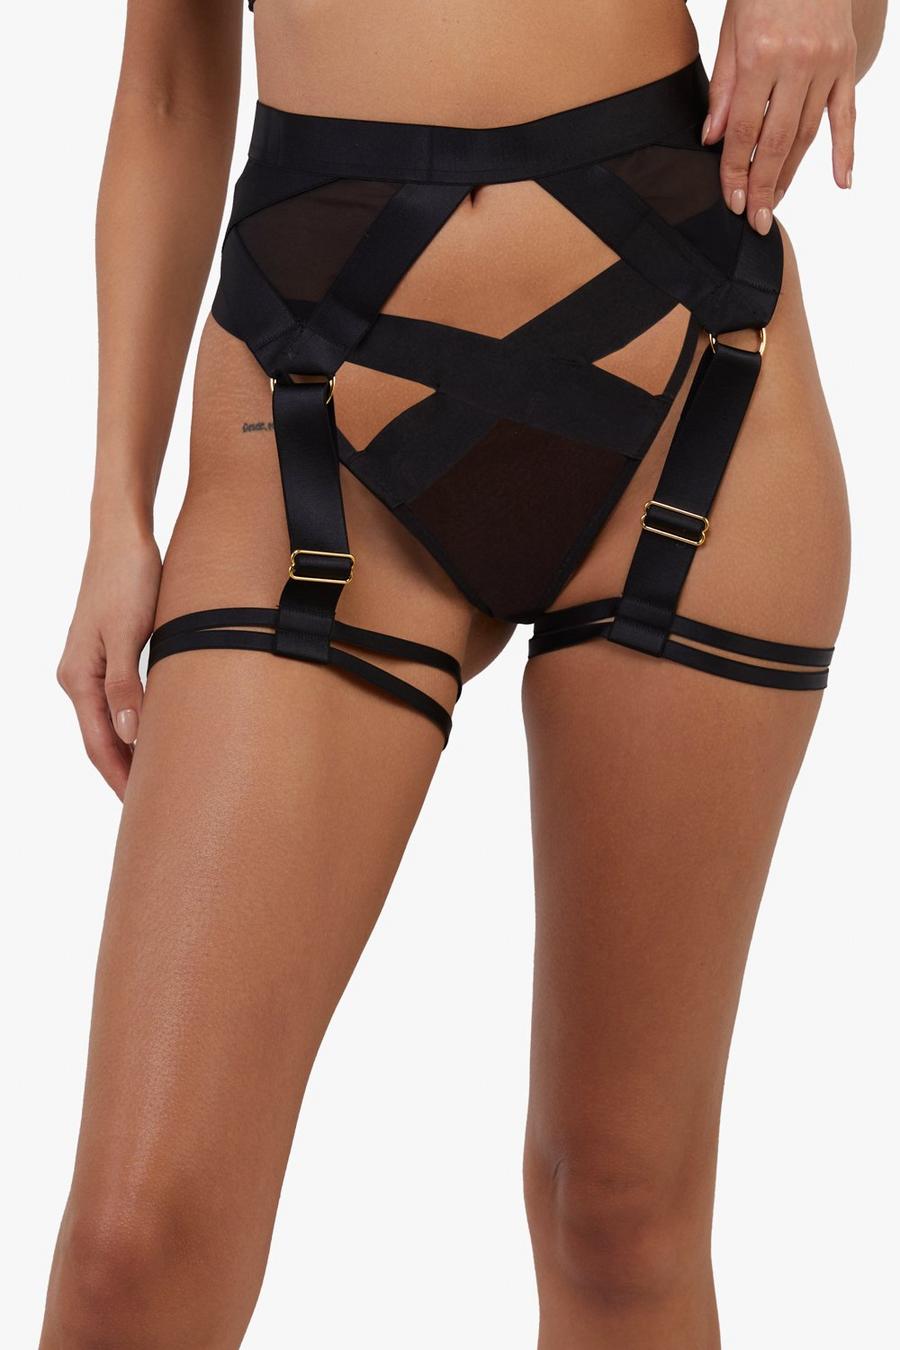 Etta Black Mesh & Elastic Multi-Strap Harness Suspender